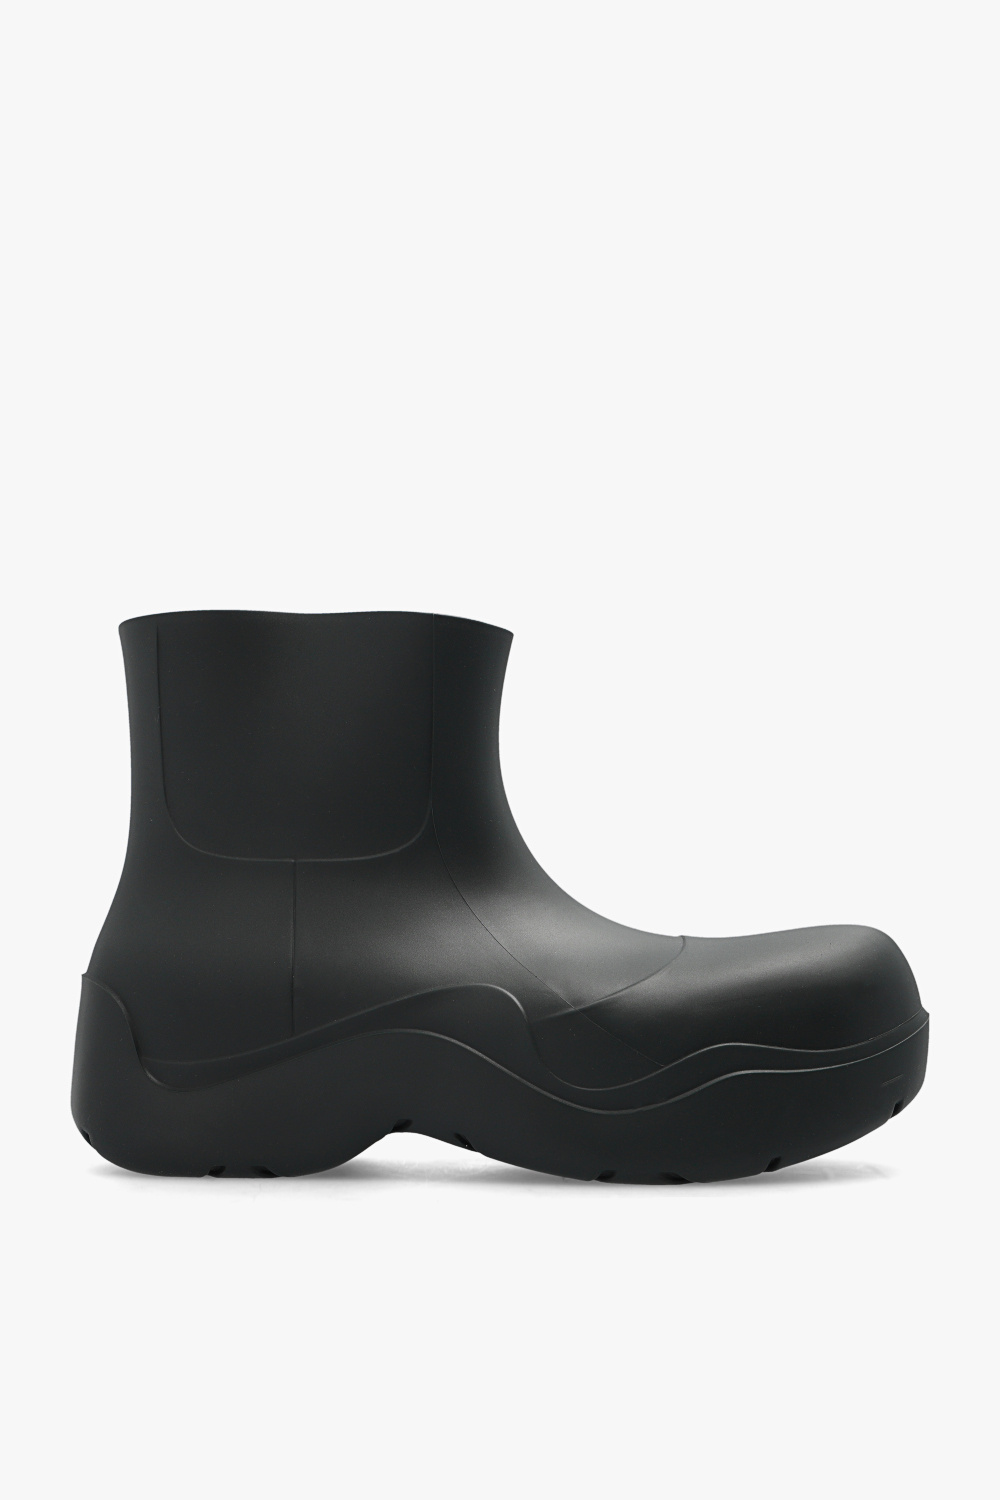 bottega short Veneta ‘Puddle’ short rain boots